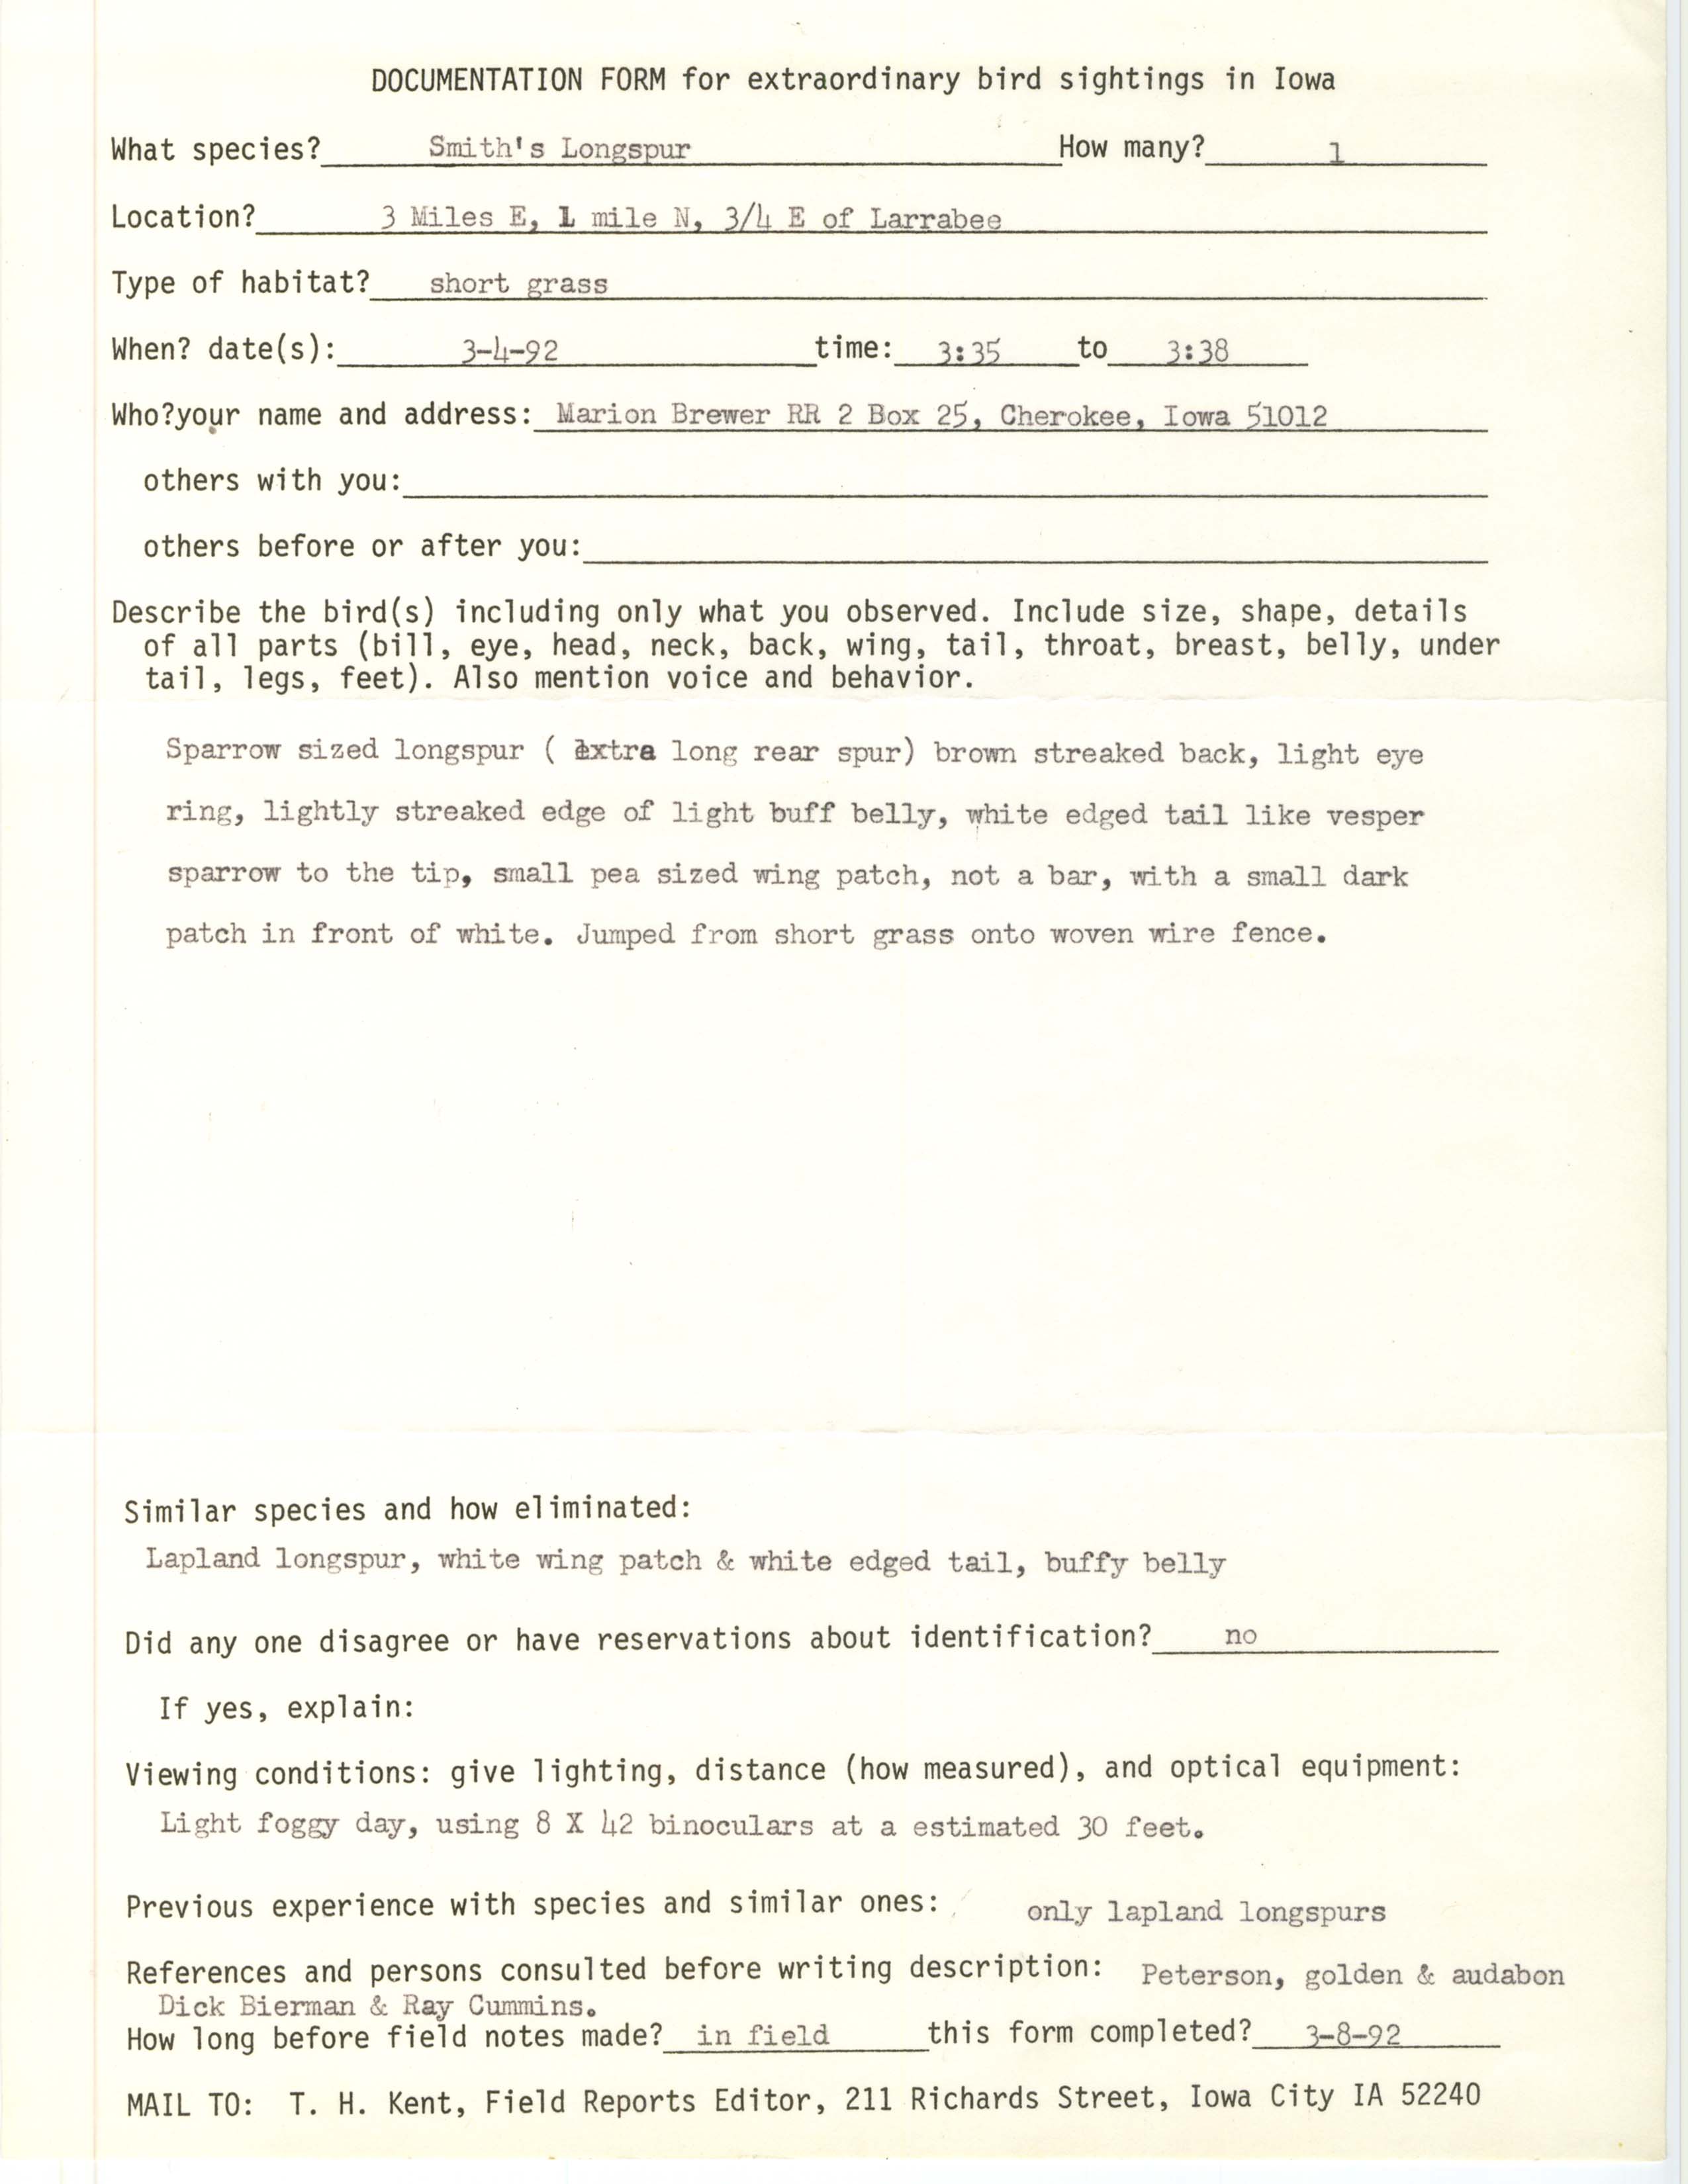 Rare bird documentation form for Smith's Longspur northeast of Larrabee, 1992